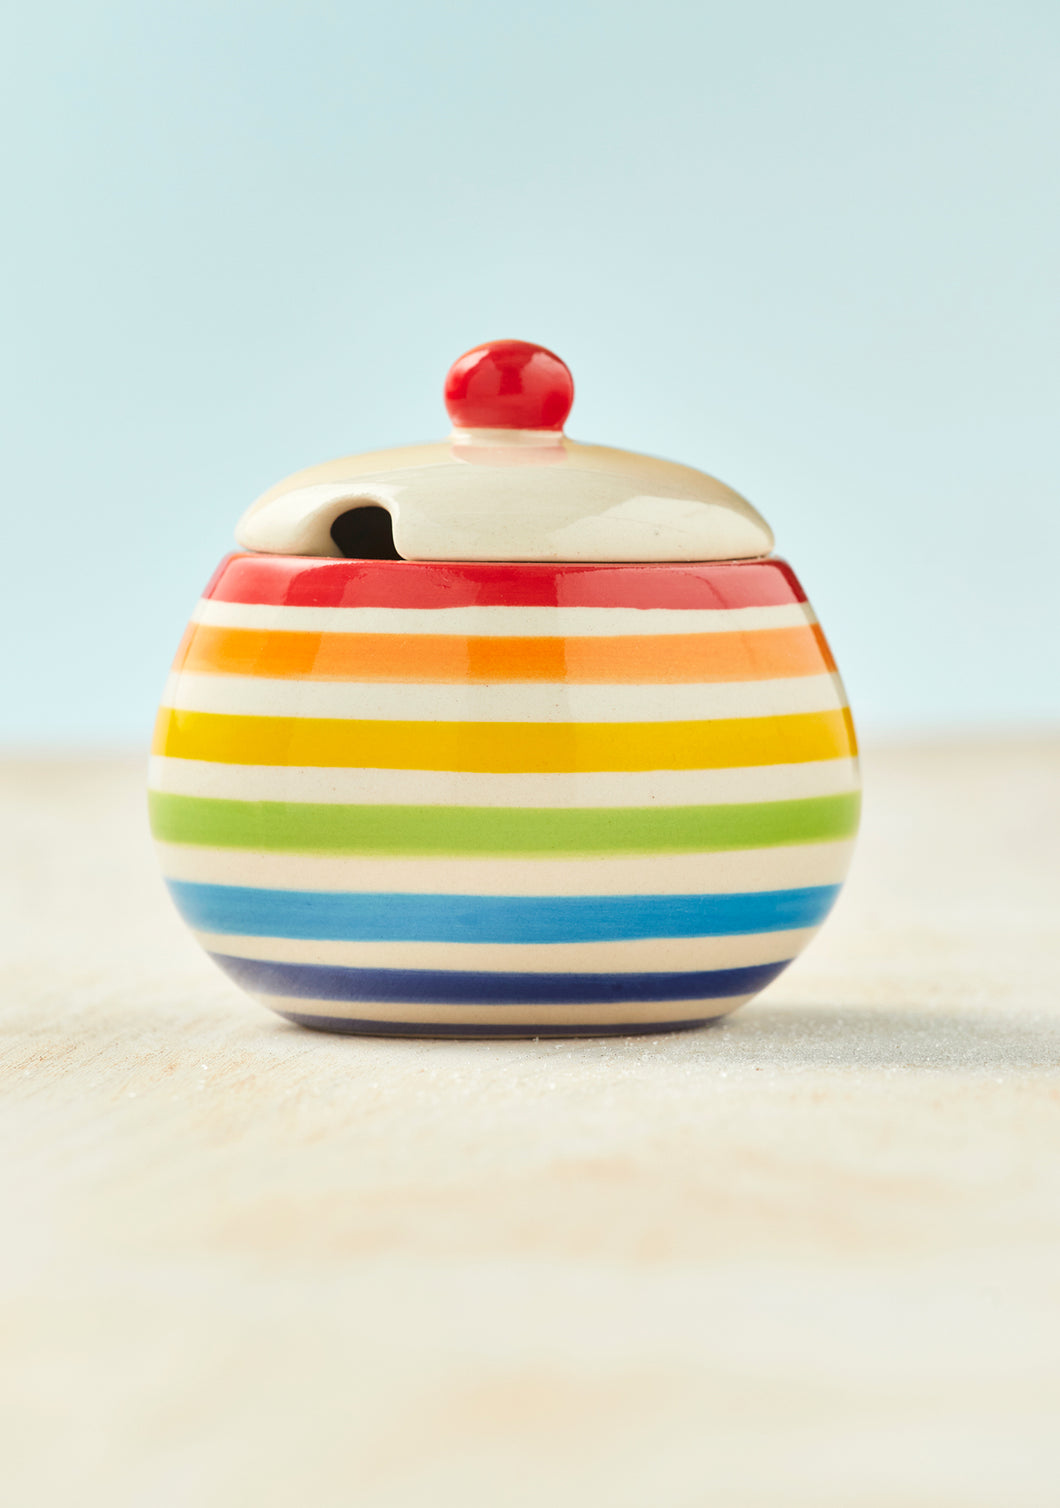 Hand painted Rainbow Ceramic Fairtrade Sugar Bowl